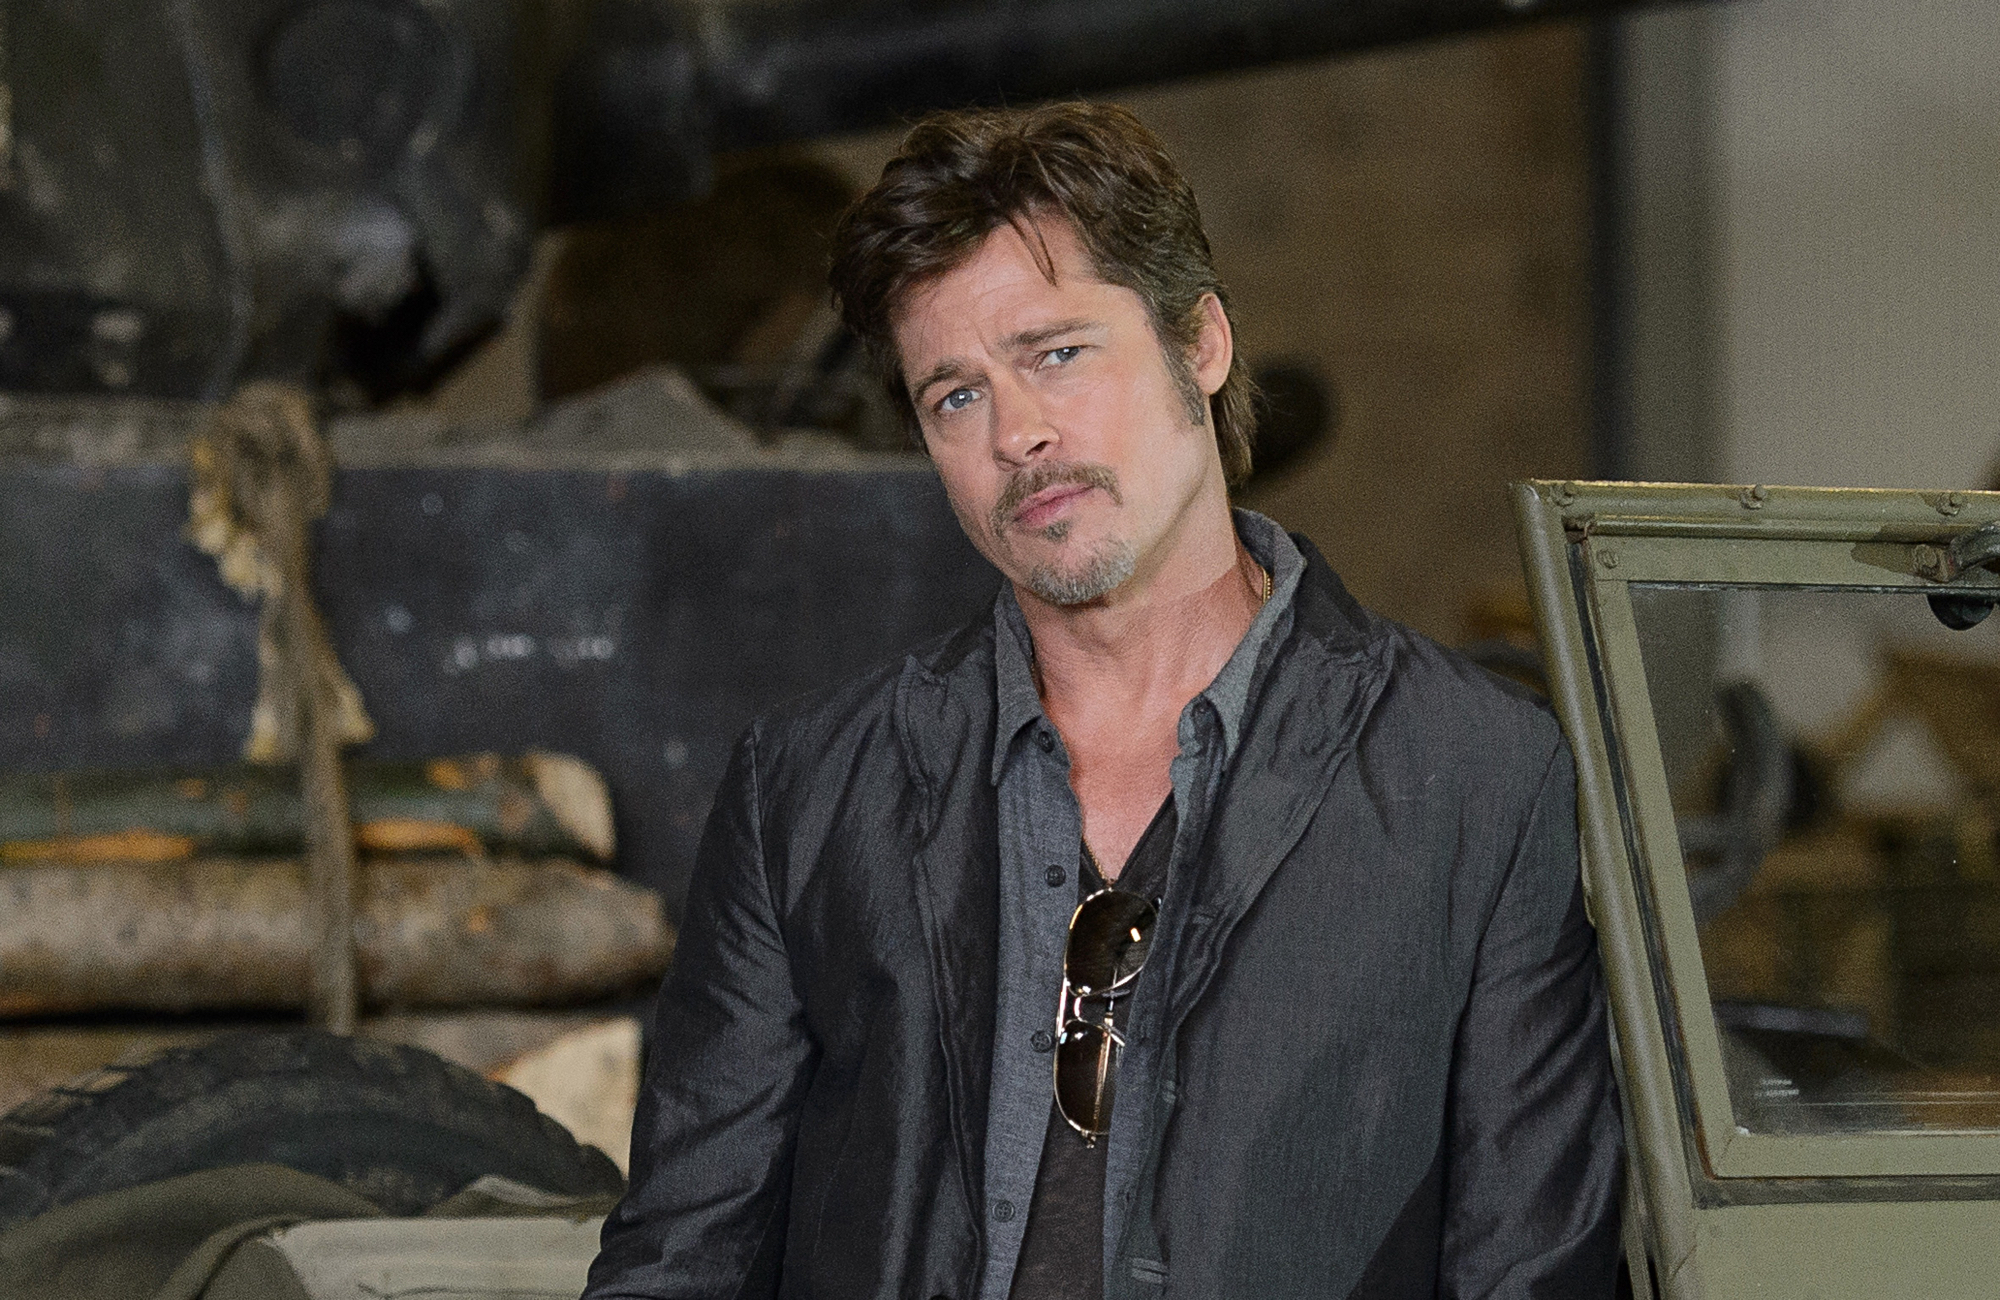 'Fury' Brad Pitt wearing a collared shirt